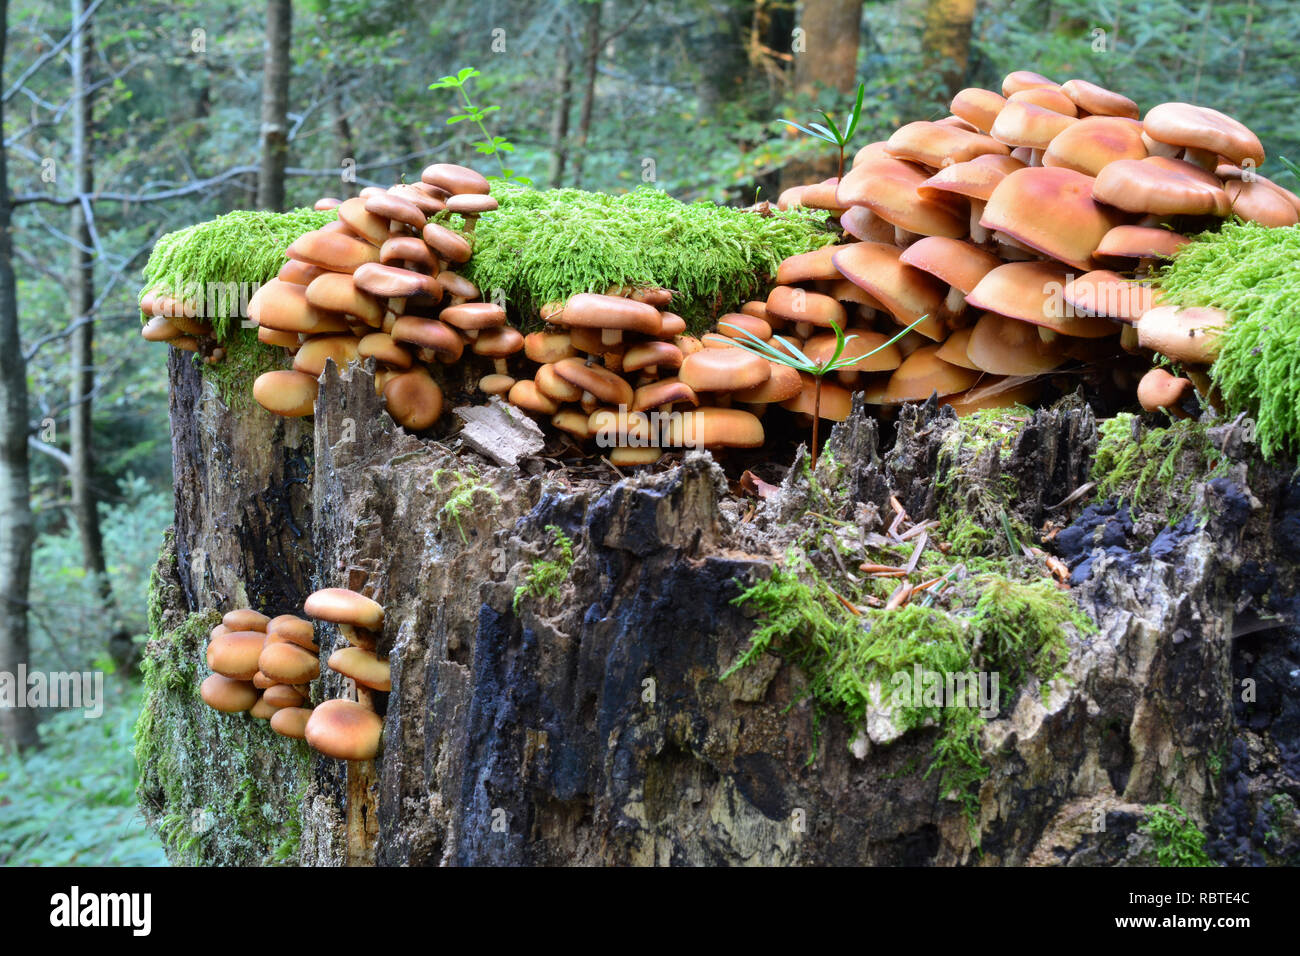 Sheathed Woodtuft mushrooms, or Pholiota mutabilis, or Kuehneromyces mutabilis in natural habitat, on rotten tree stump, side view; delicious edible m Stock Photo